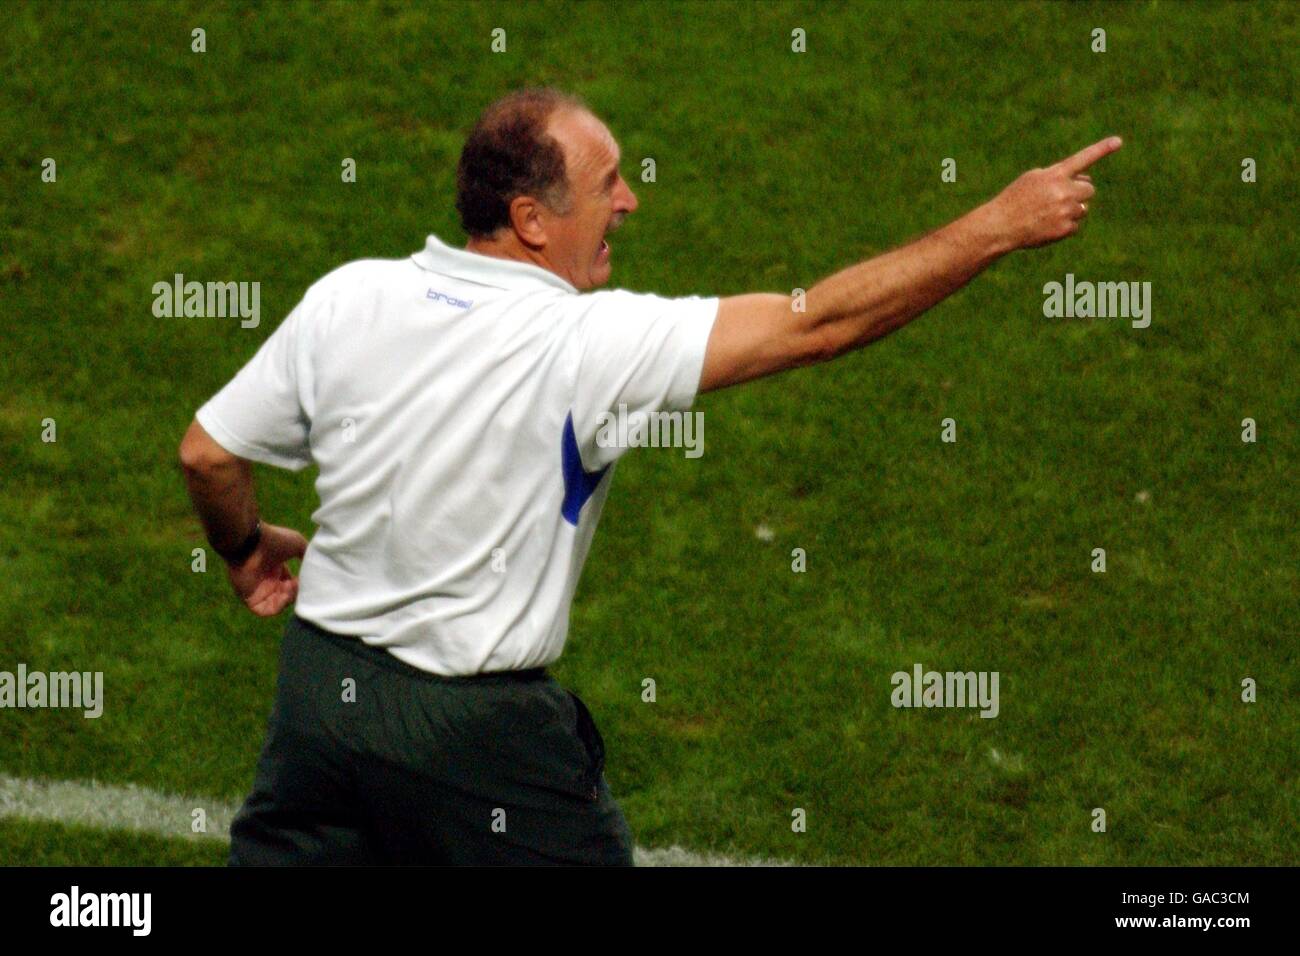 Soccer - FIFA World Cup 2002 - Semi Final - Brazil v Turkey. Brazil's coach Luiz Felipe Scolari points the way forward to his team during the game with Turkey Stock Photo